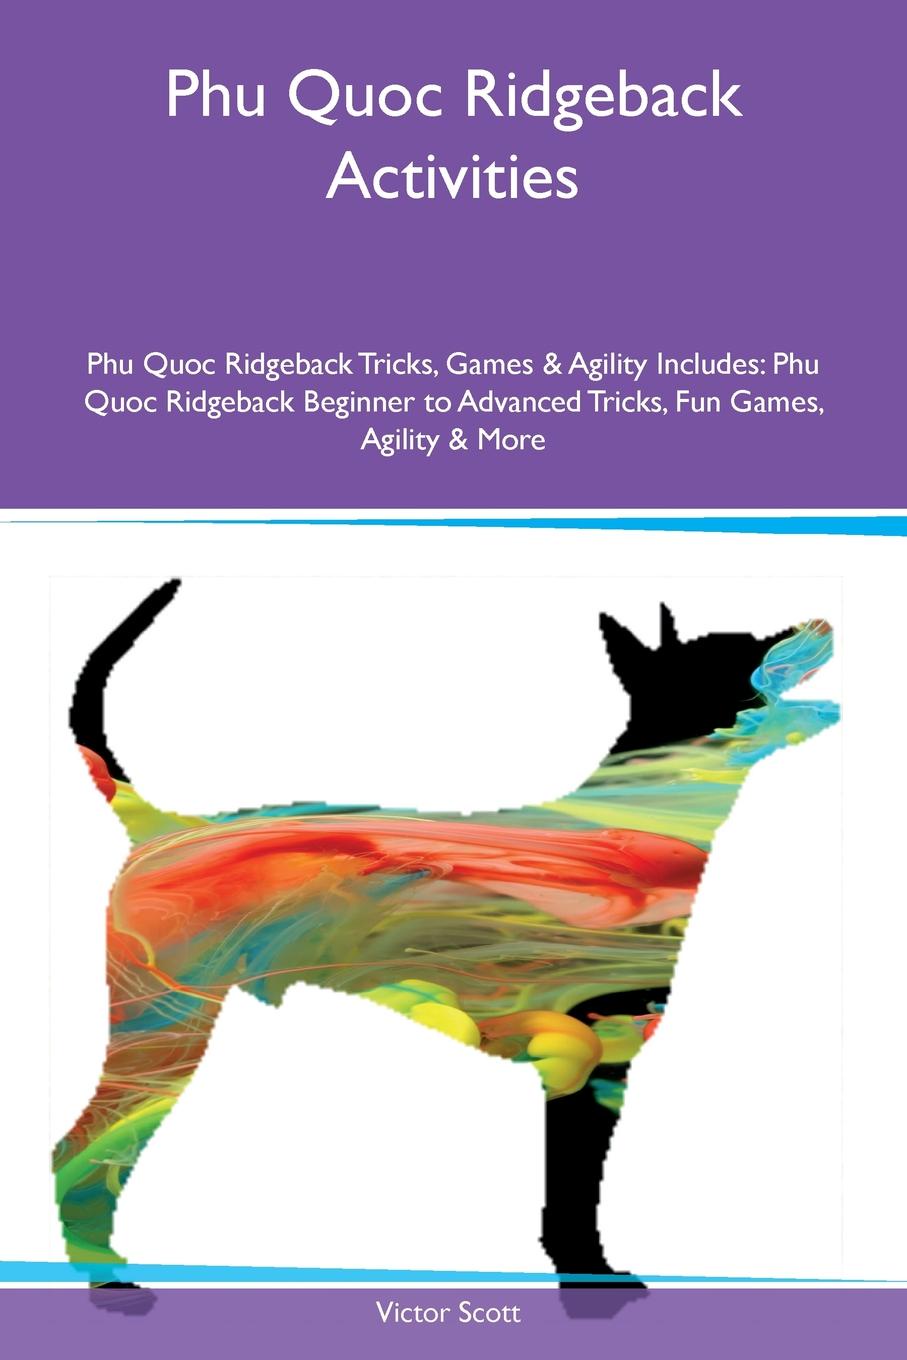 Phu Quoc Ridgeback Activities Phu Quoc Ridgeback Tricks, Games & Agility Includes. Phu Quoc Ridgeback Beginner to Advanced Tricks, Fun Games, Agility & More